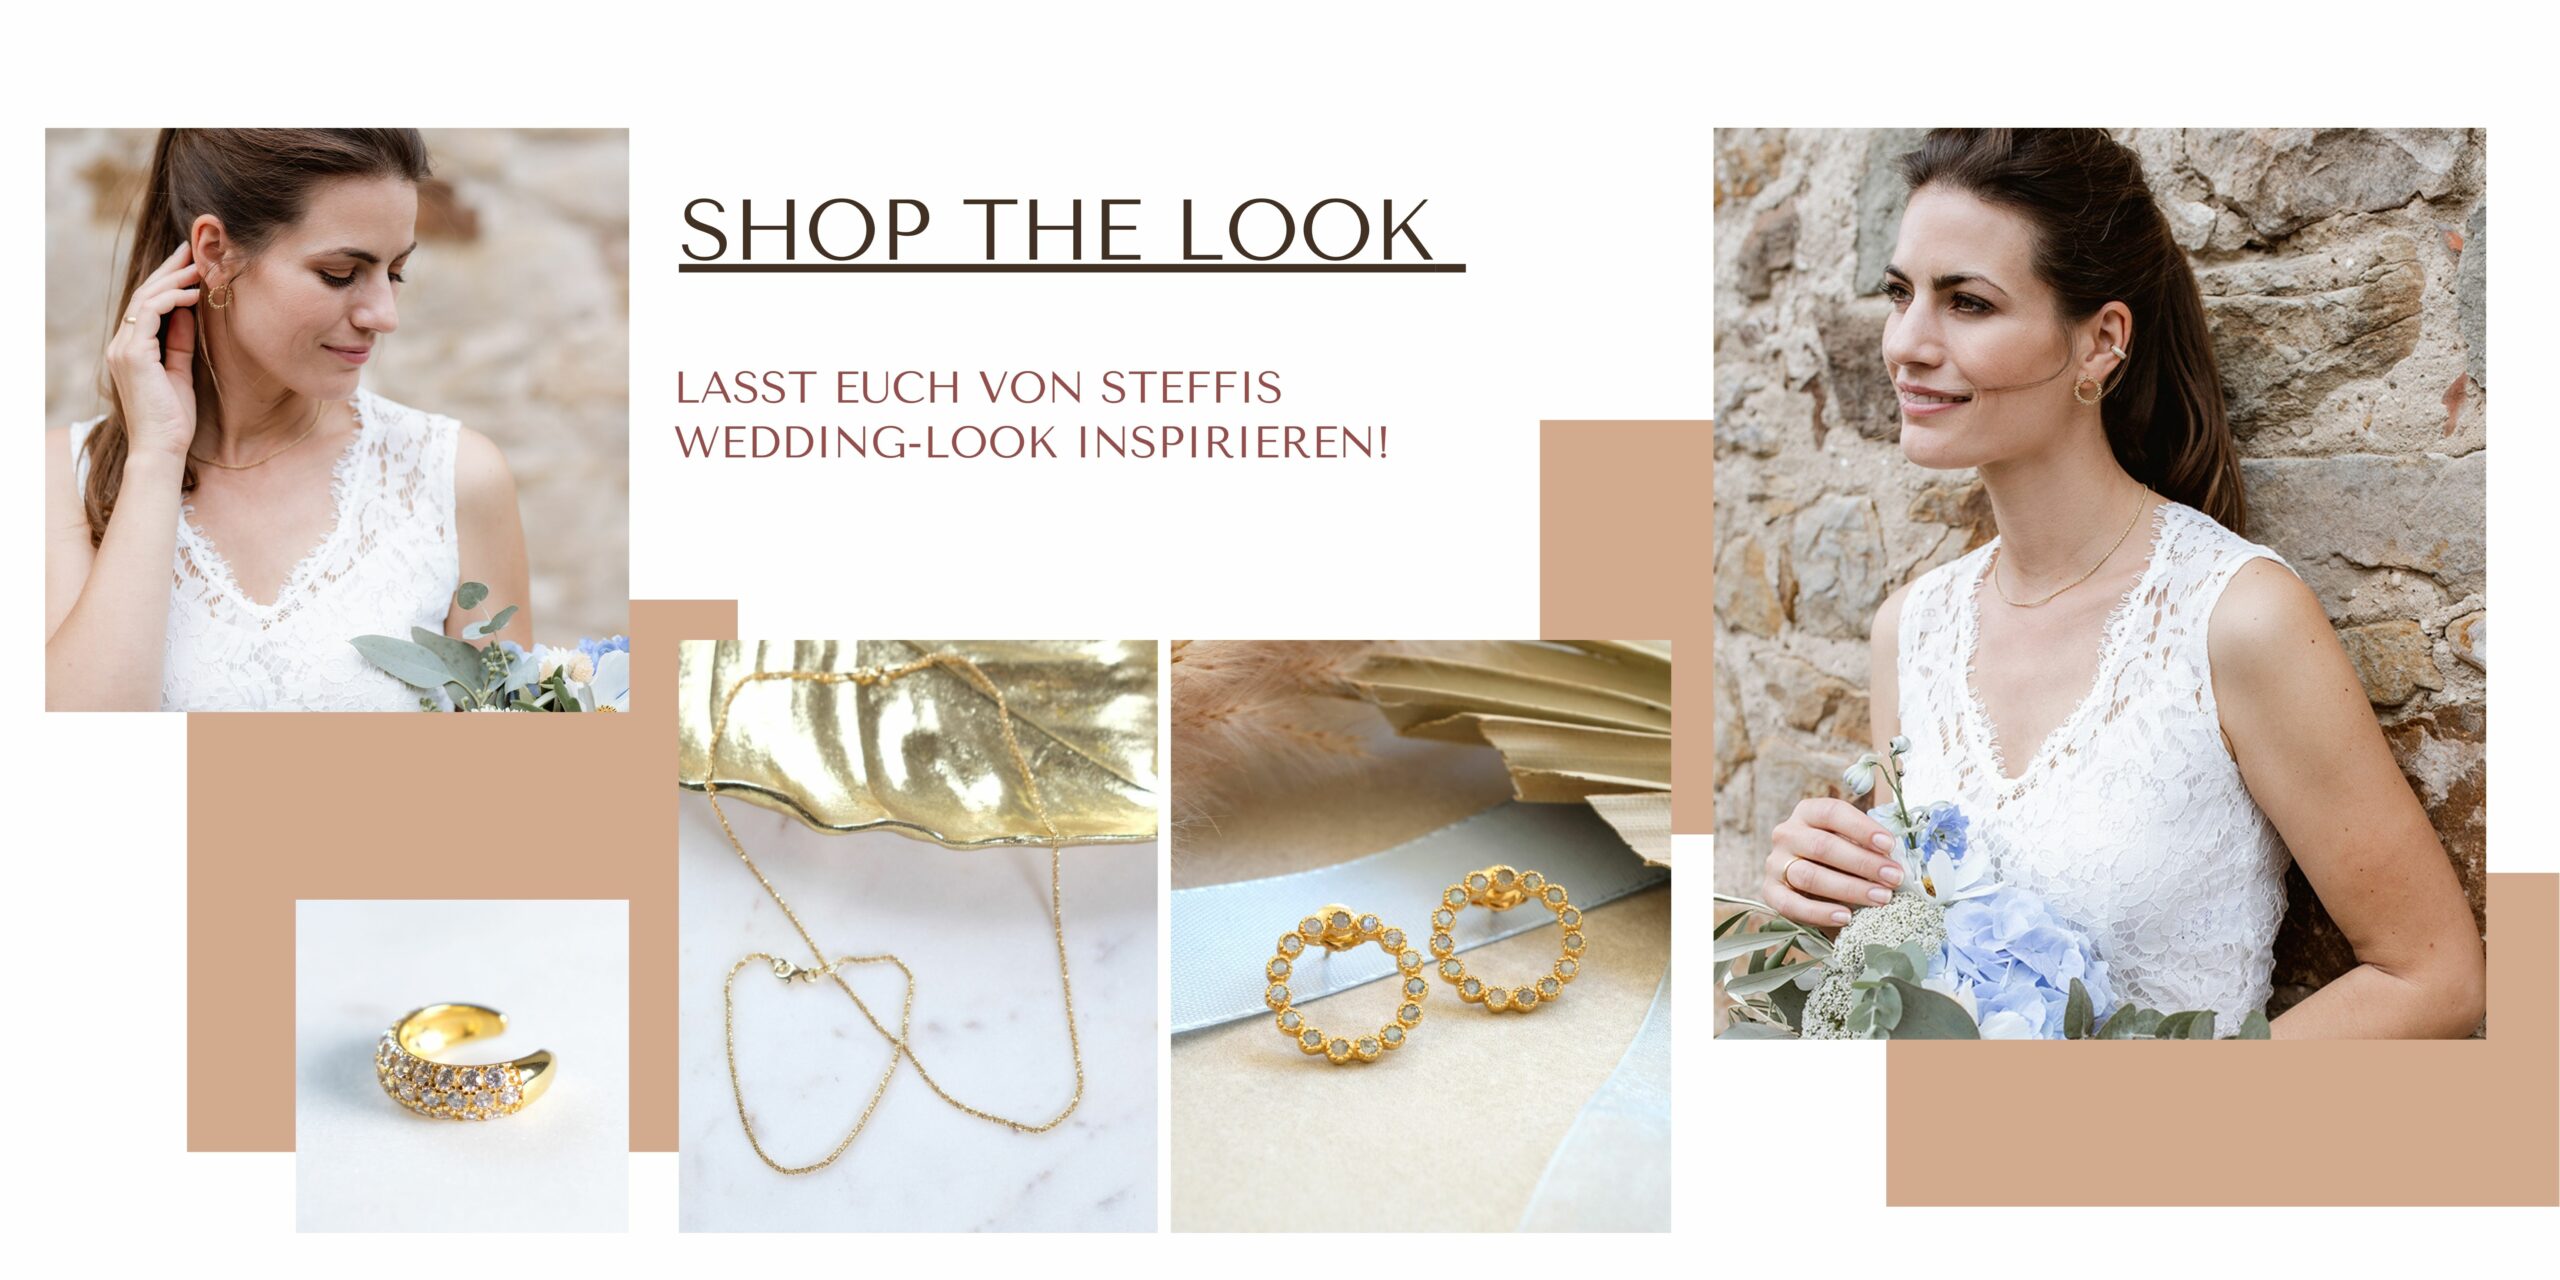 Shop The Look - Wedding-Look